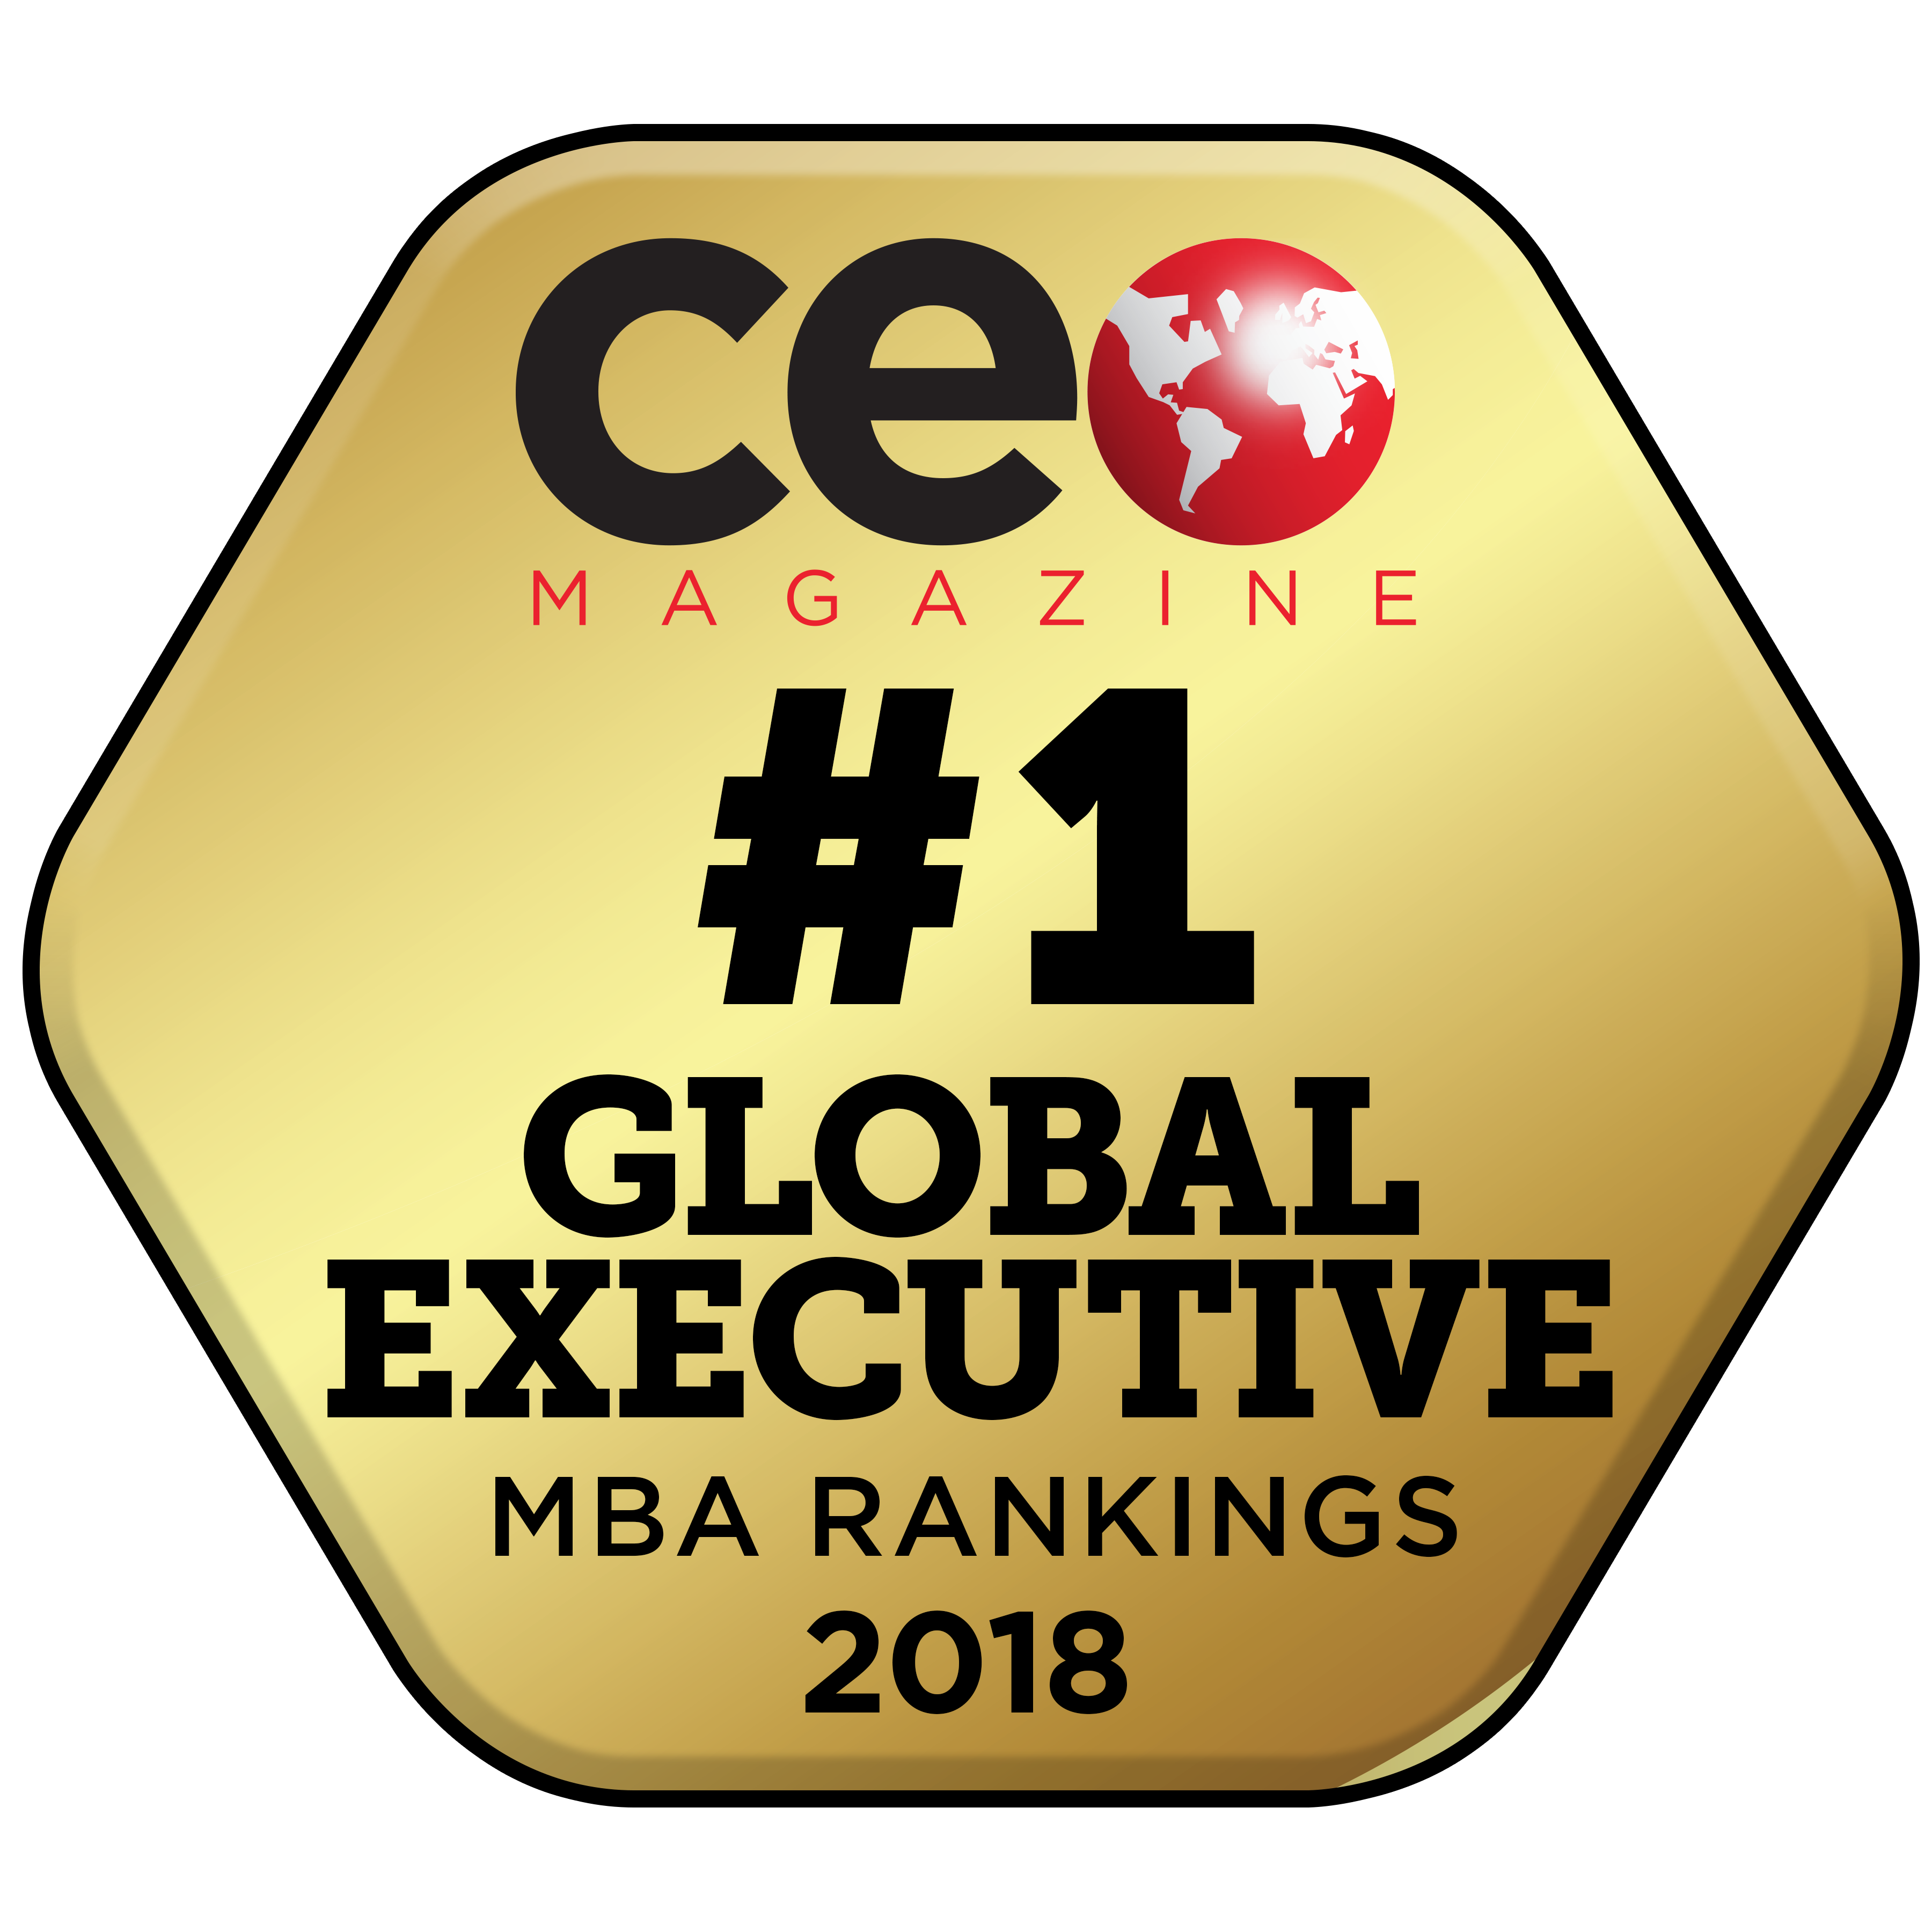 CEO Magazine #1 Global Executive MBA Badge for 2018